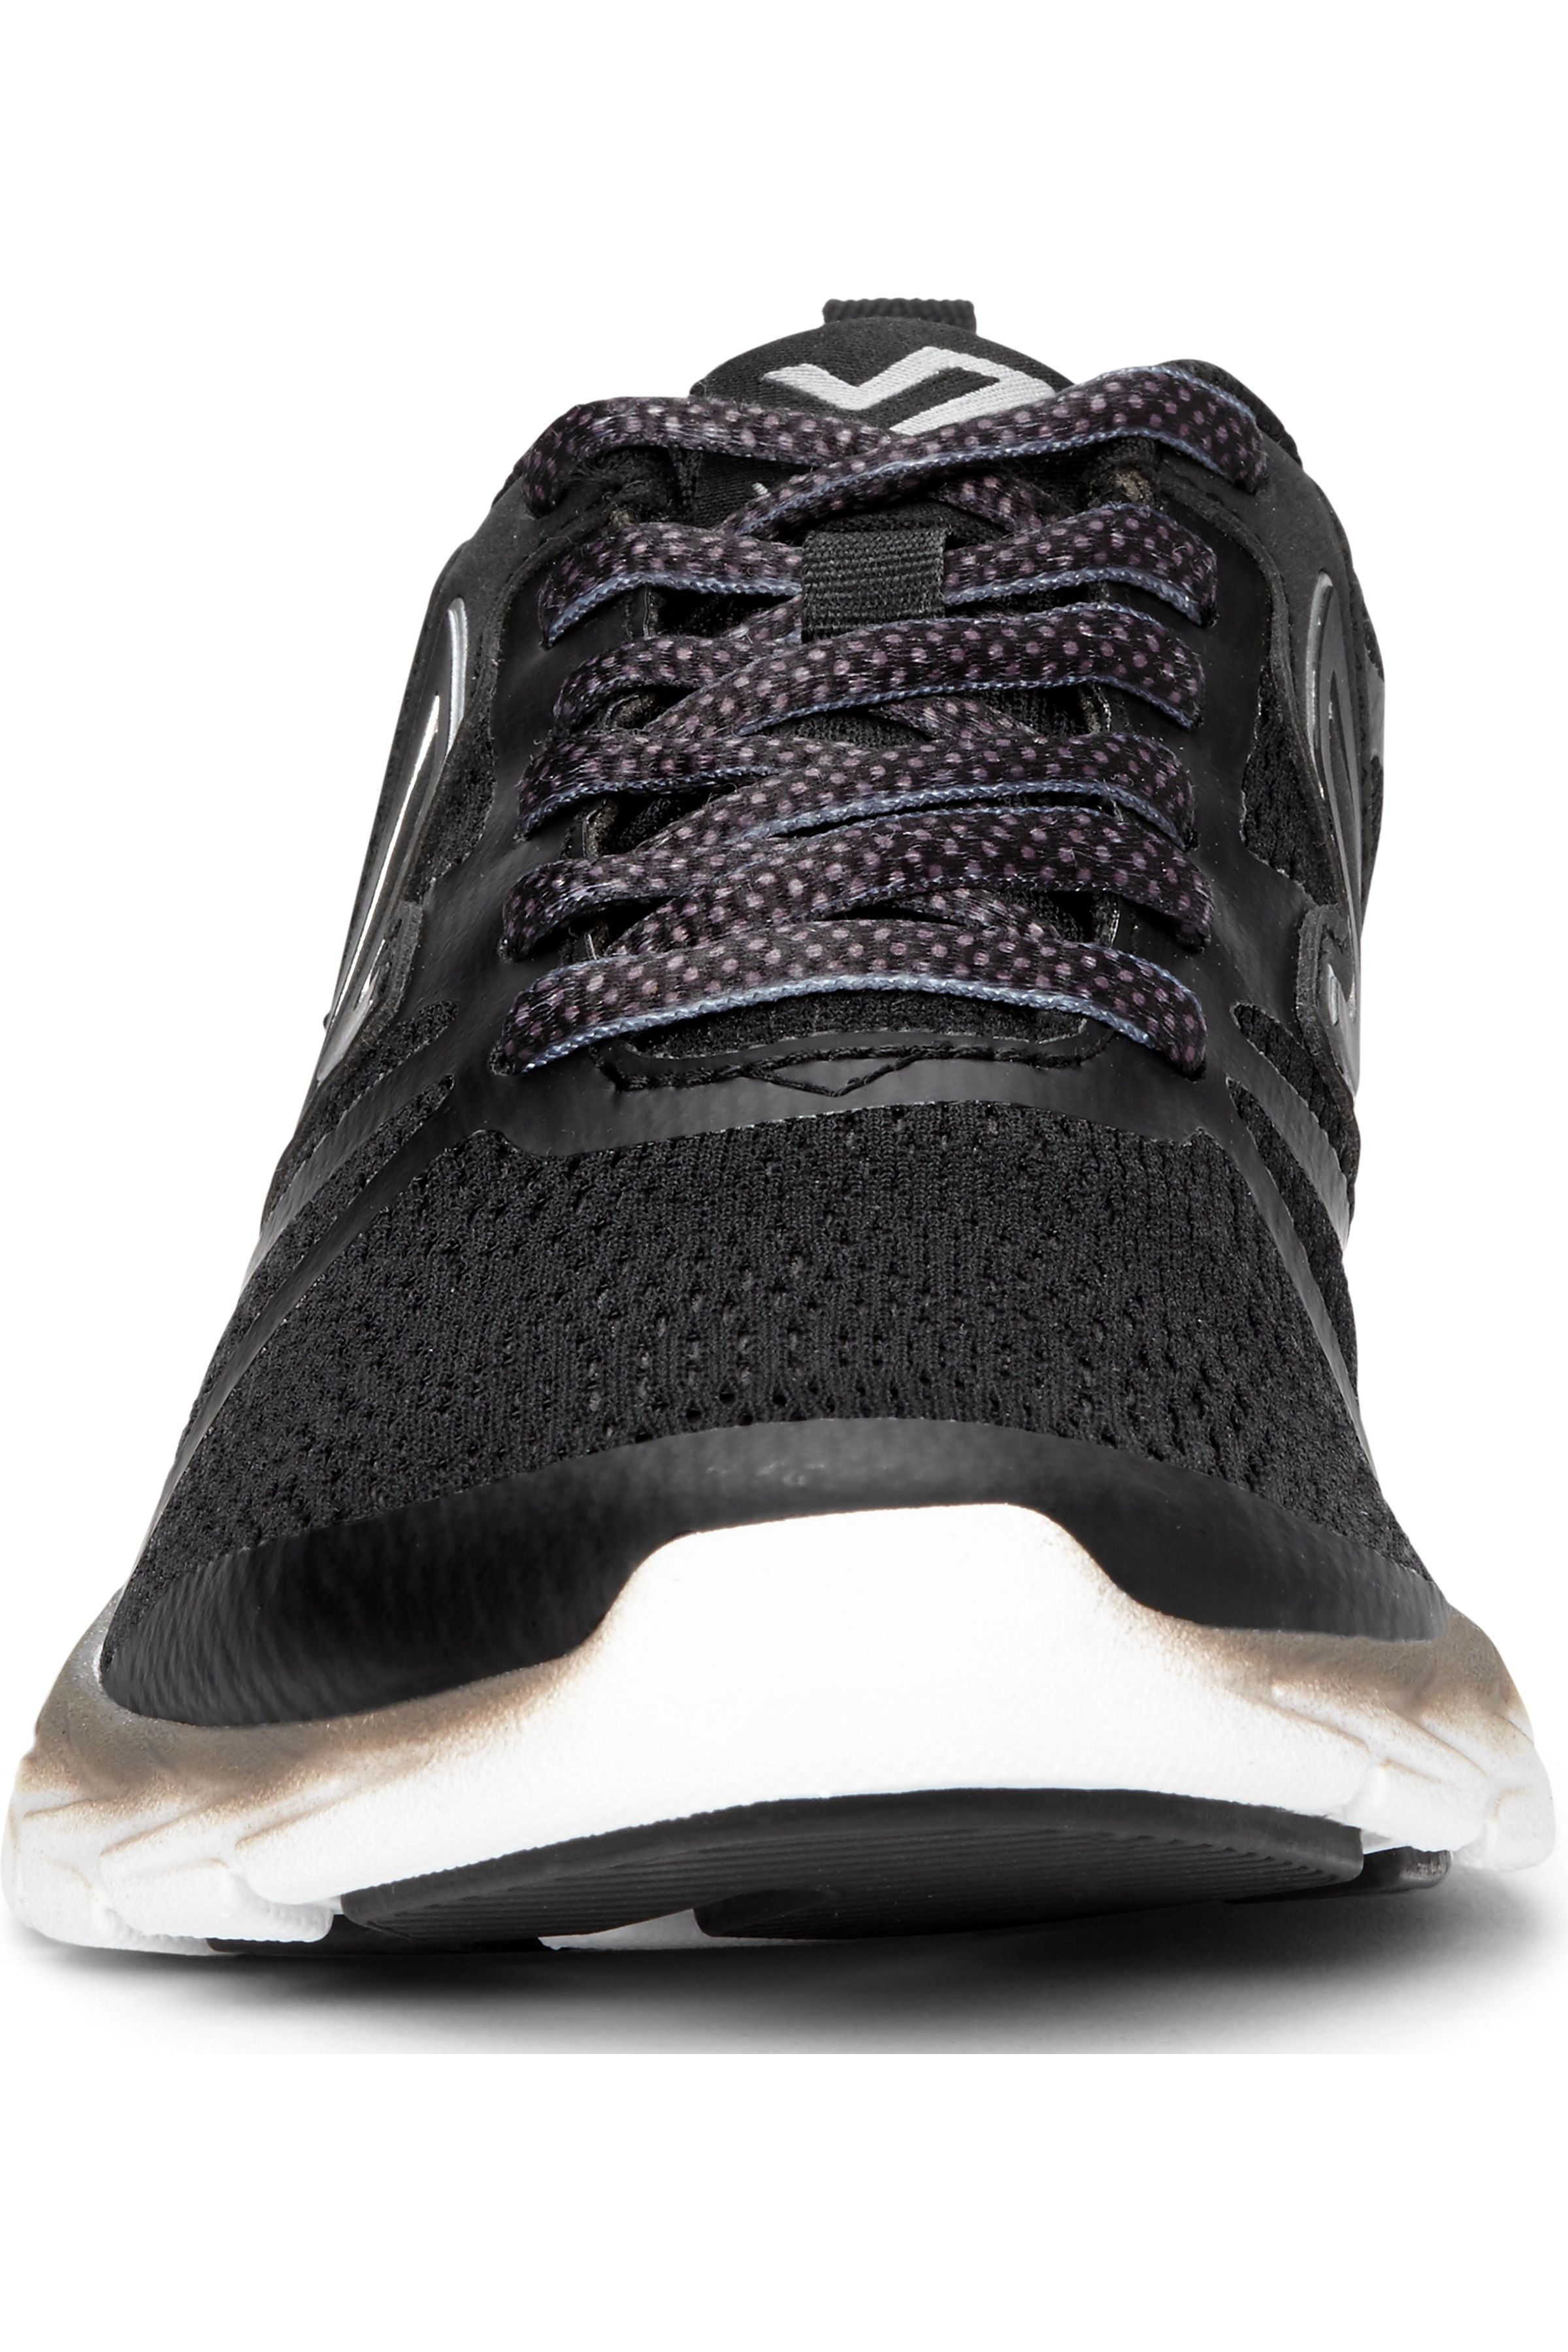 Vionic Brisk Miles Lace-Up Active Sneakers, front, black